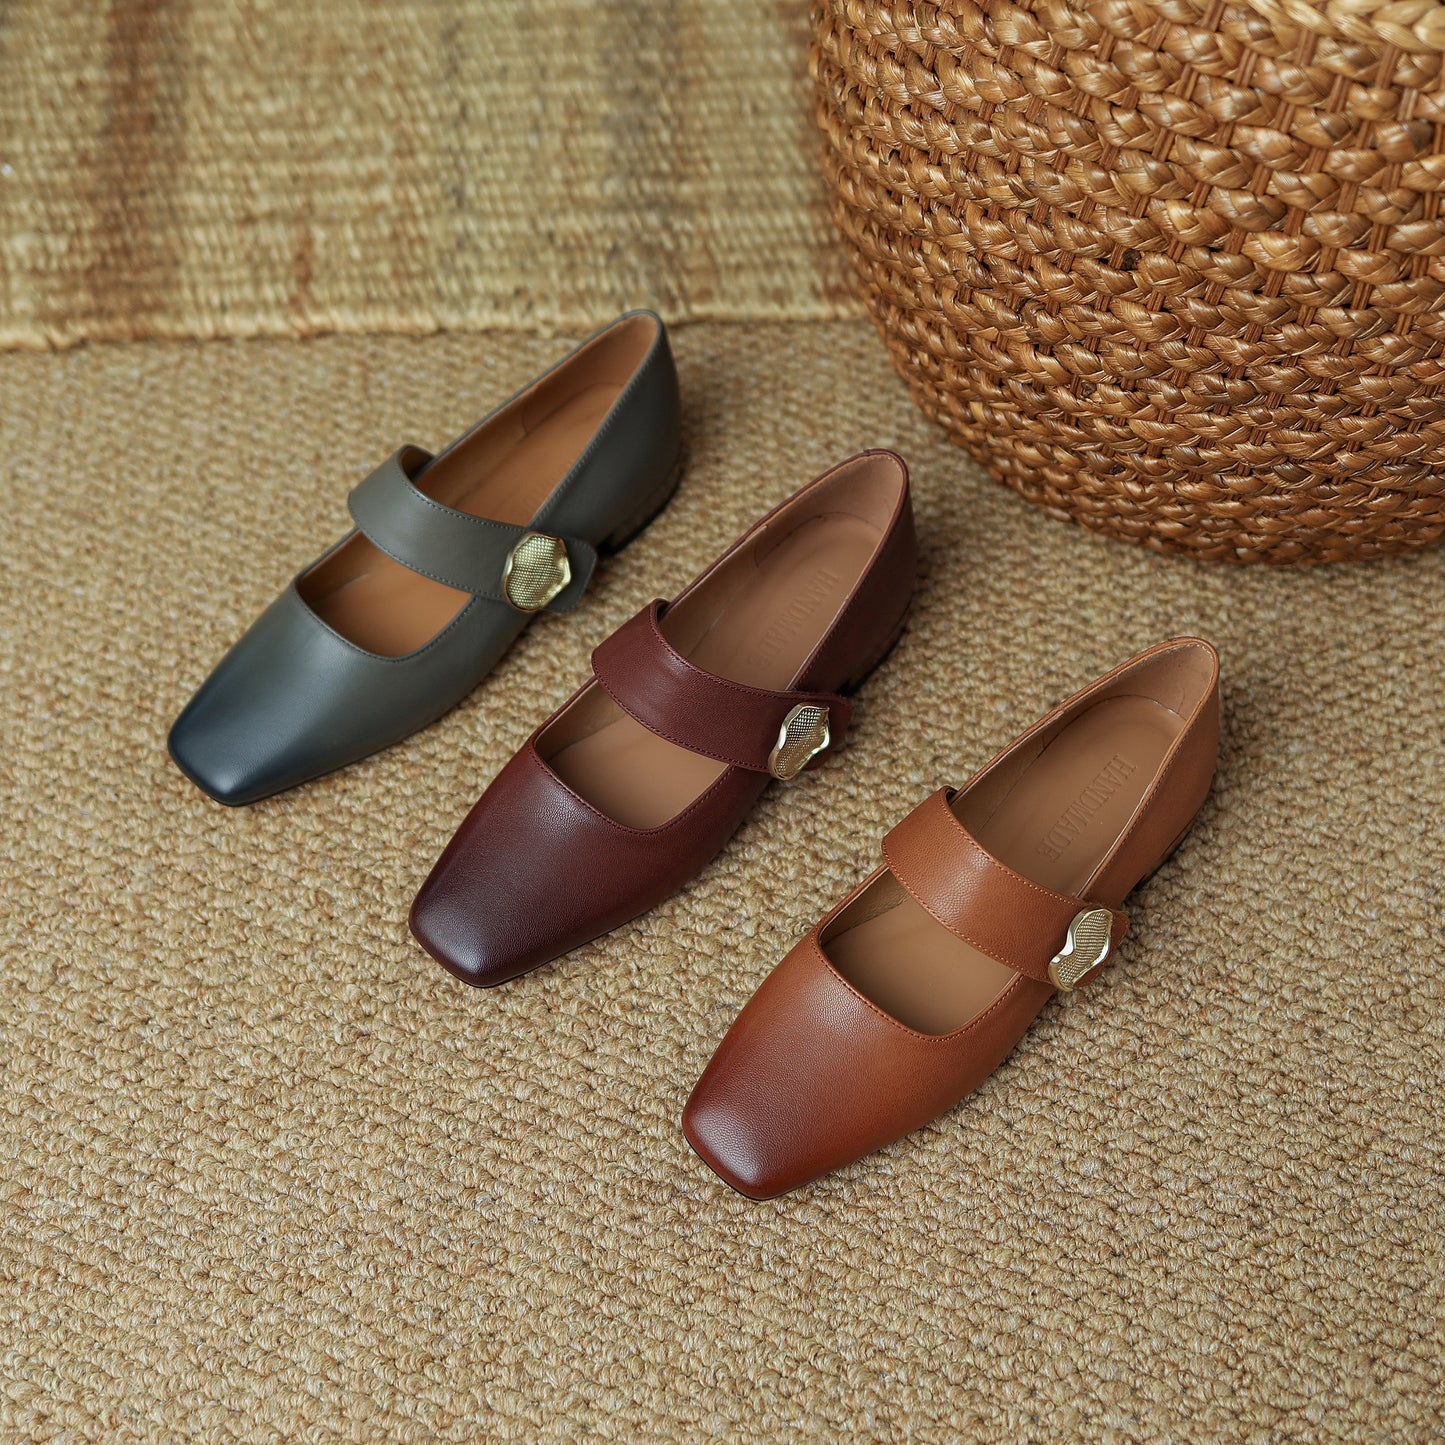 TinaCus Women's Genuine Leather Handmade Square Toe Flat Heel Metal Buckle Mary Jane Dress Shoes